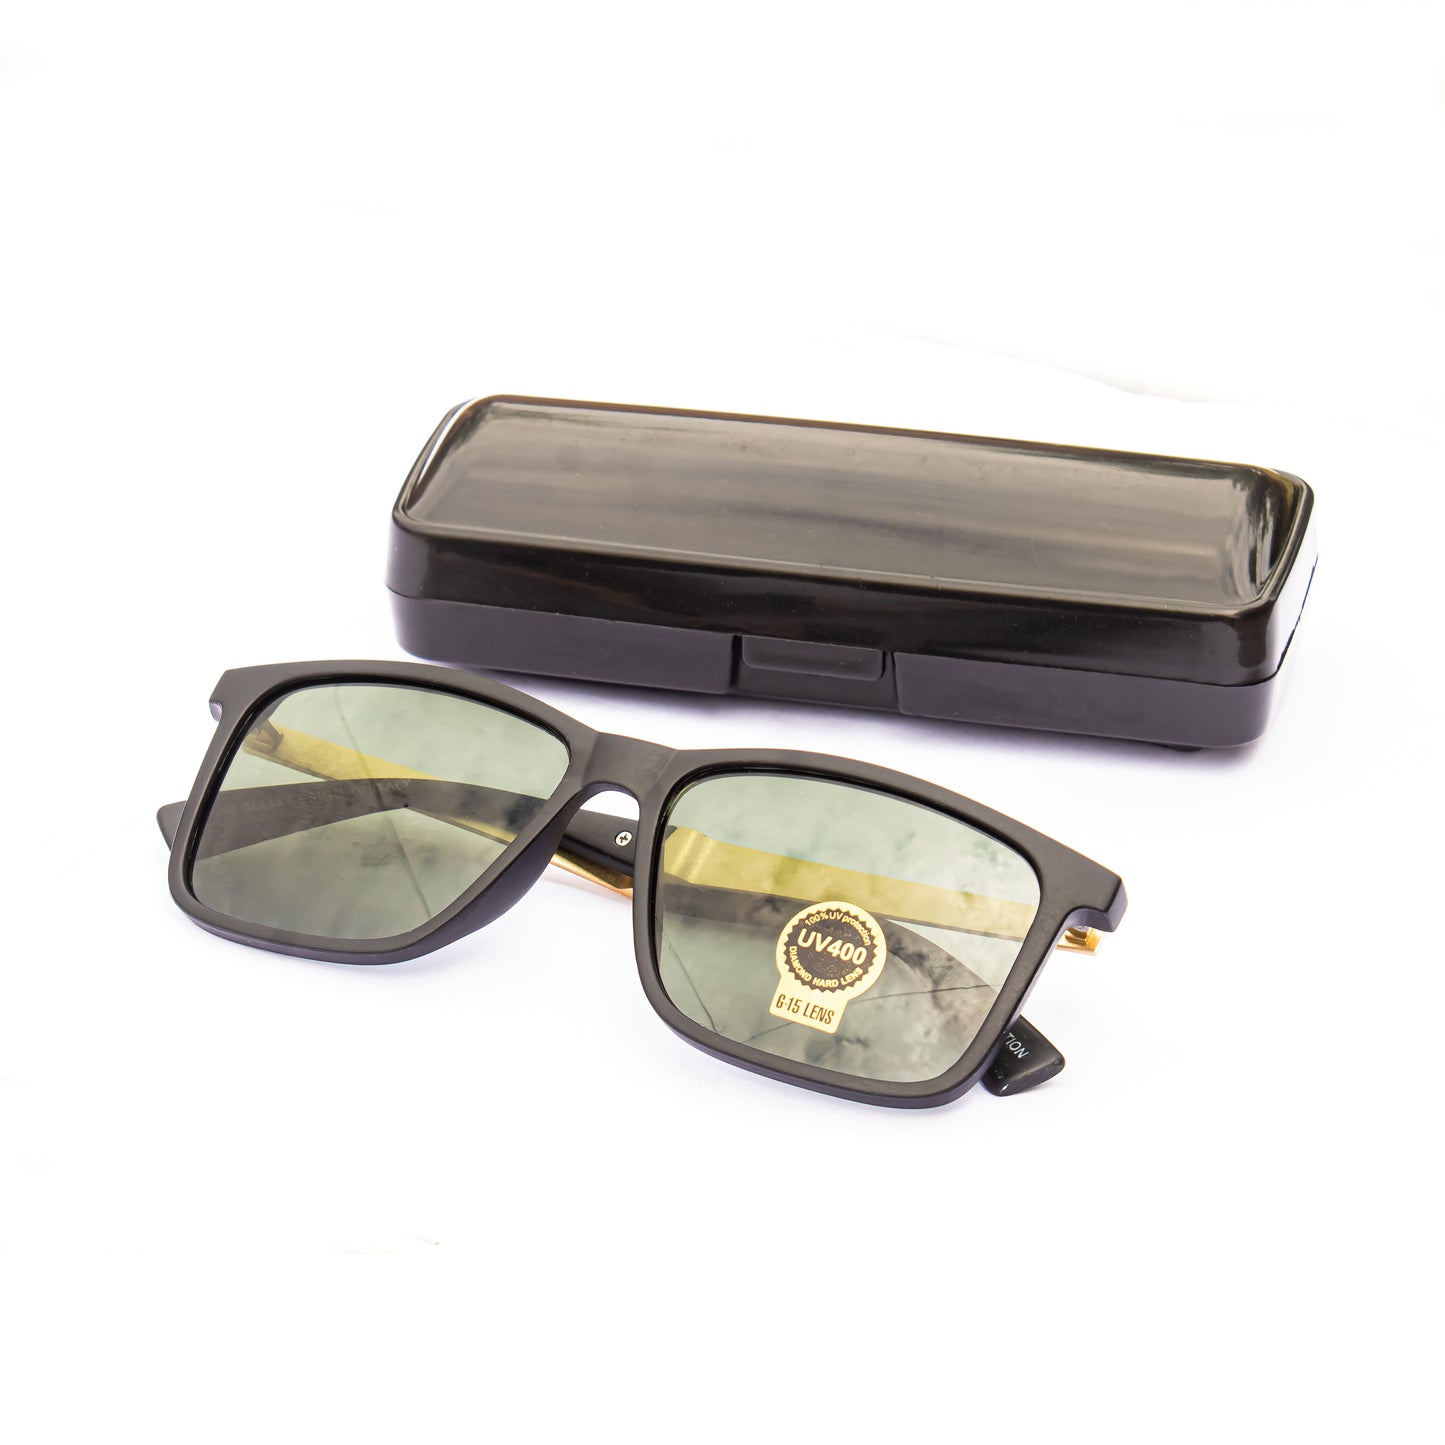 Jiebo Classic Design Square Frame Sunglasses For Men